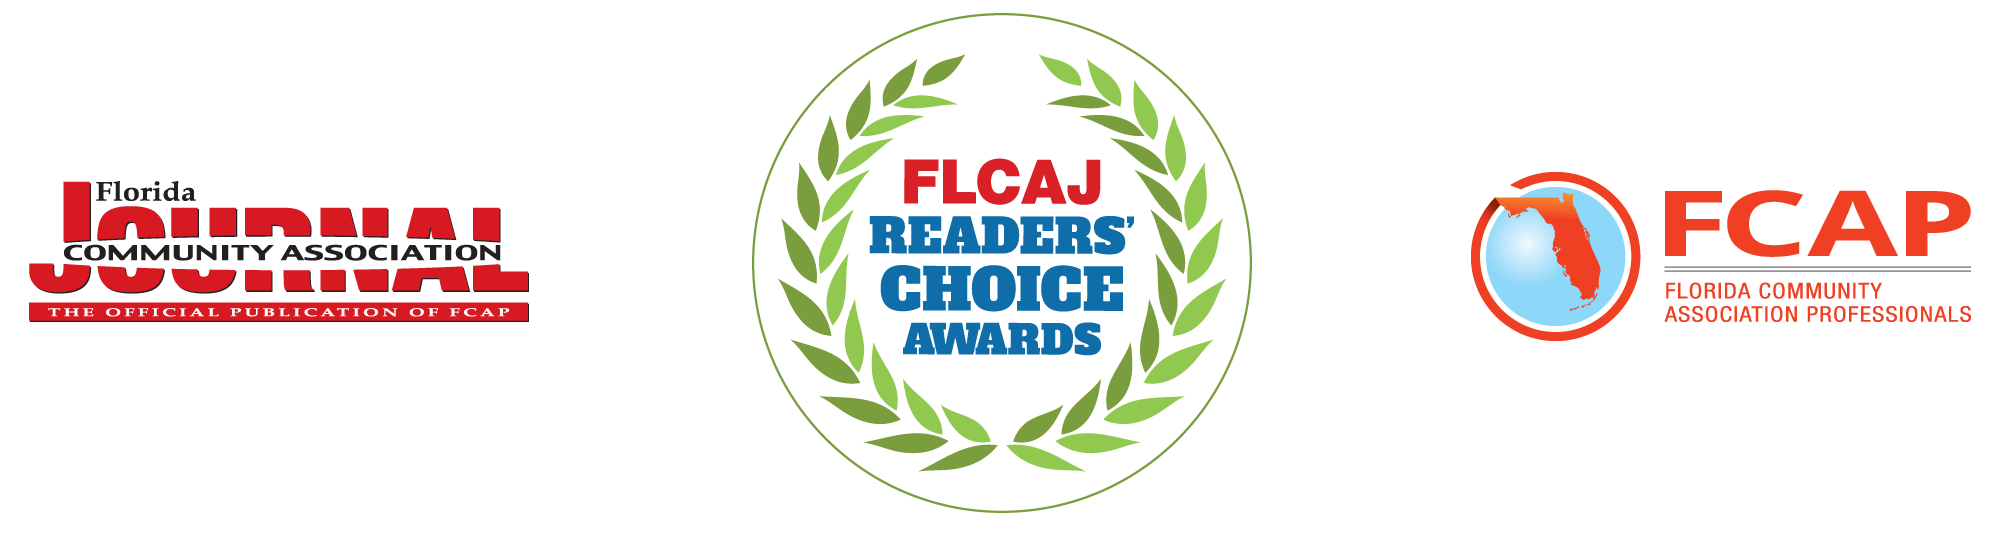 FLCAJ Readers' Choice Award